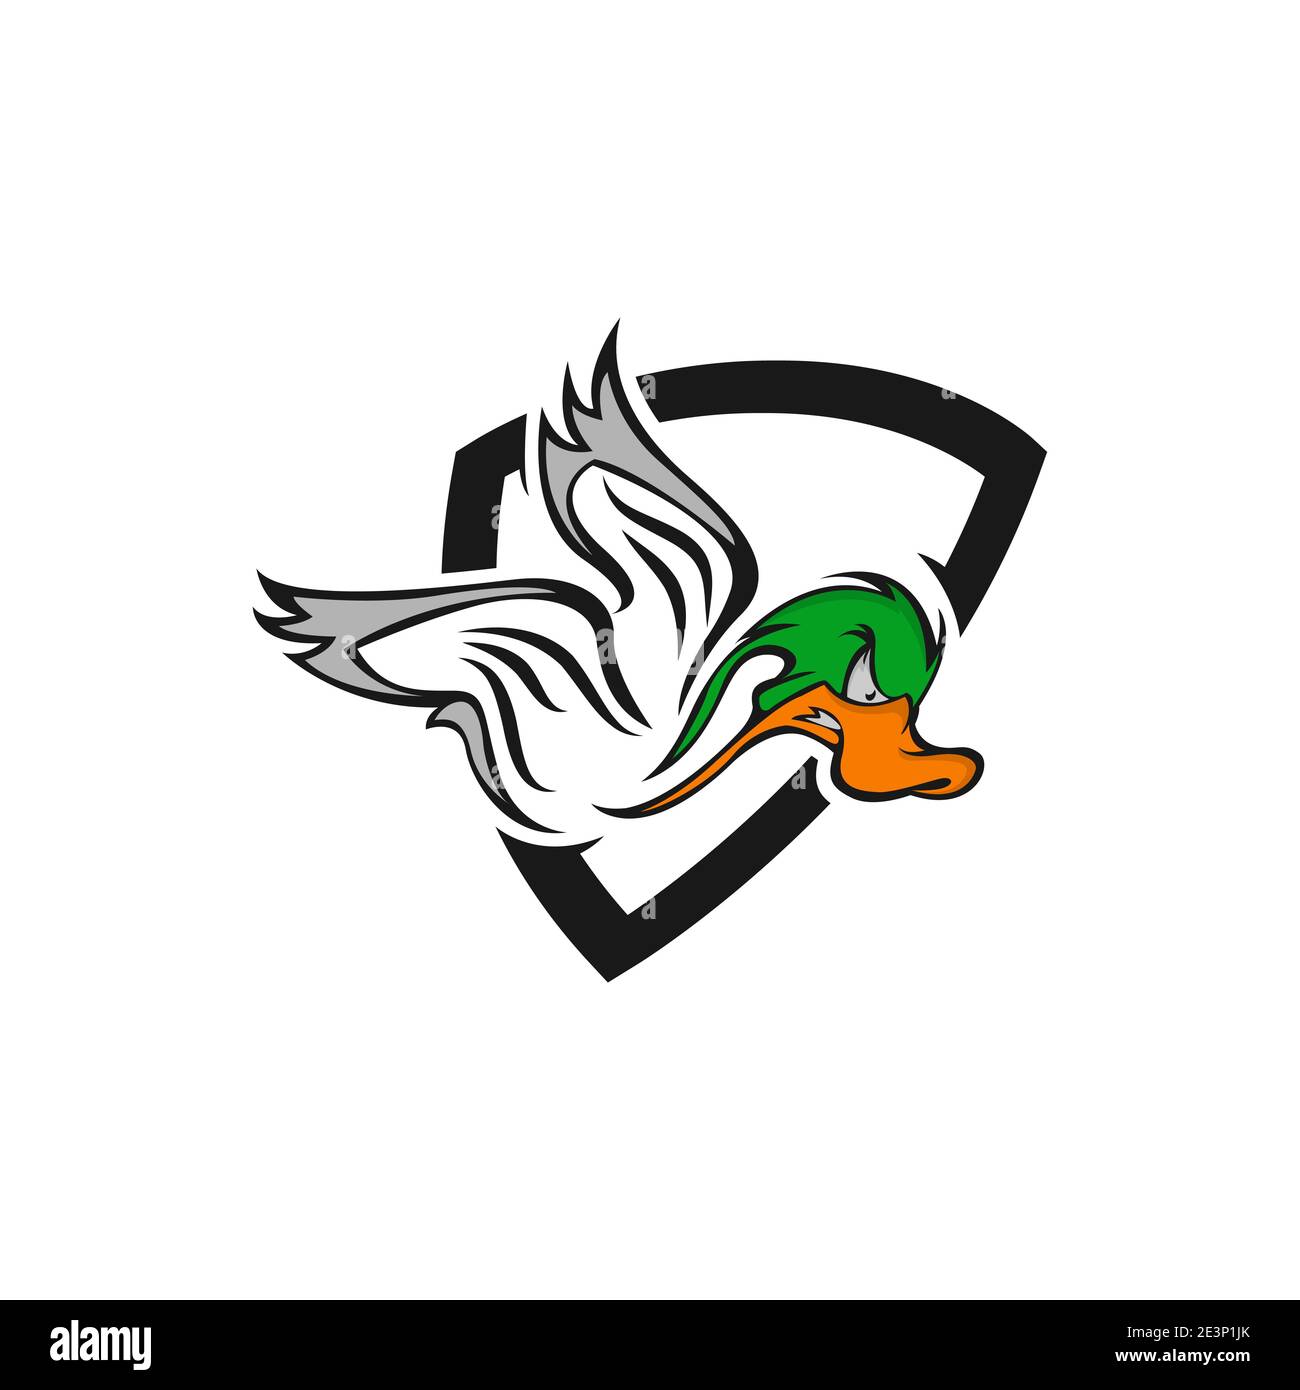 The Ducks logo design inspiration for club. Duck mascot logo design.EPS 10 Stock Vector